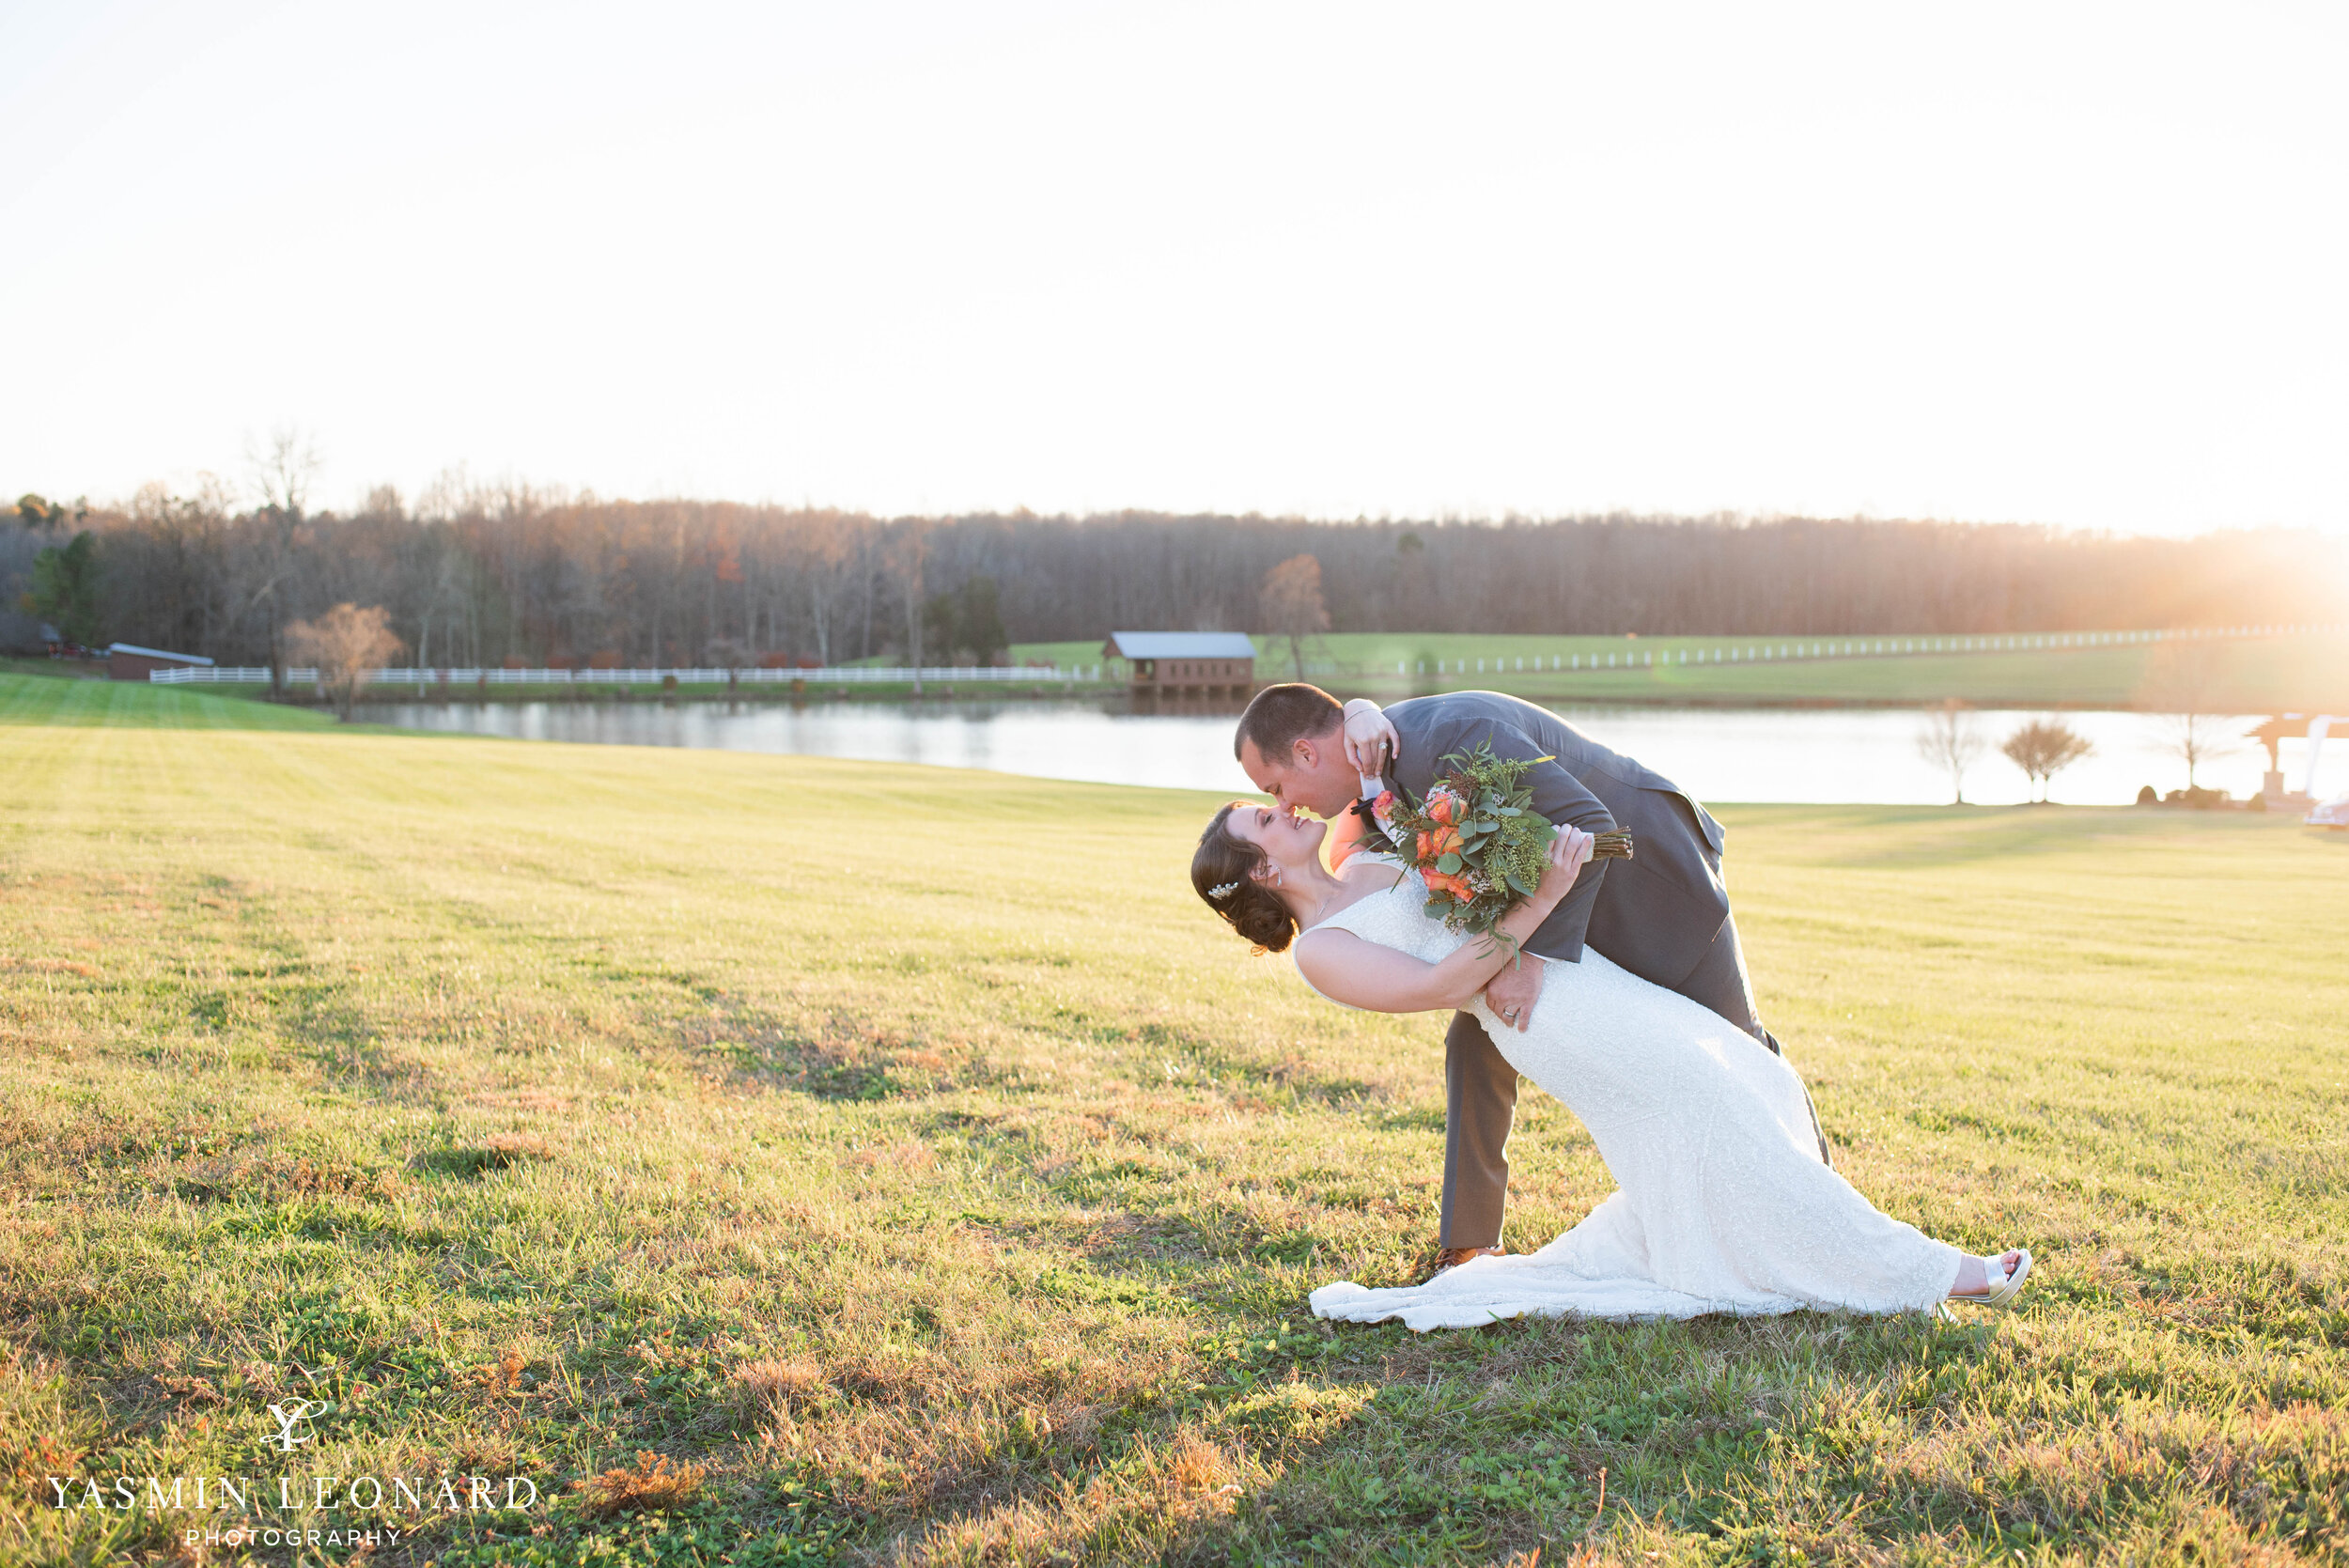 Jared and Katy - Adaumont Farms - High Point Weddings - NC Barn Weddings - Yasmin Leonard Photography-39.jpg